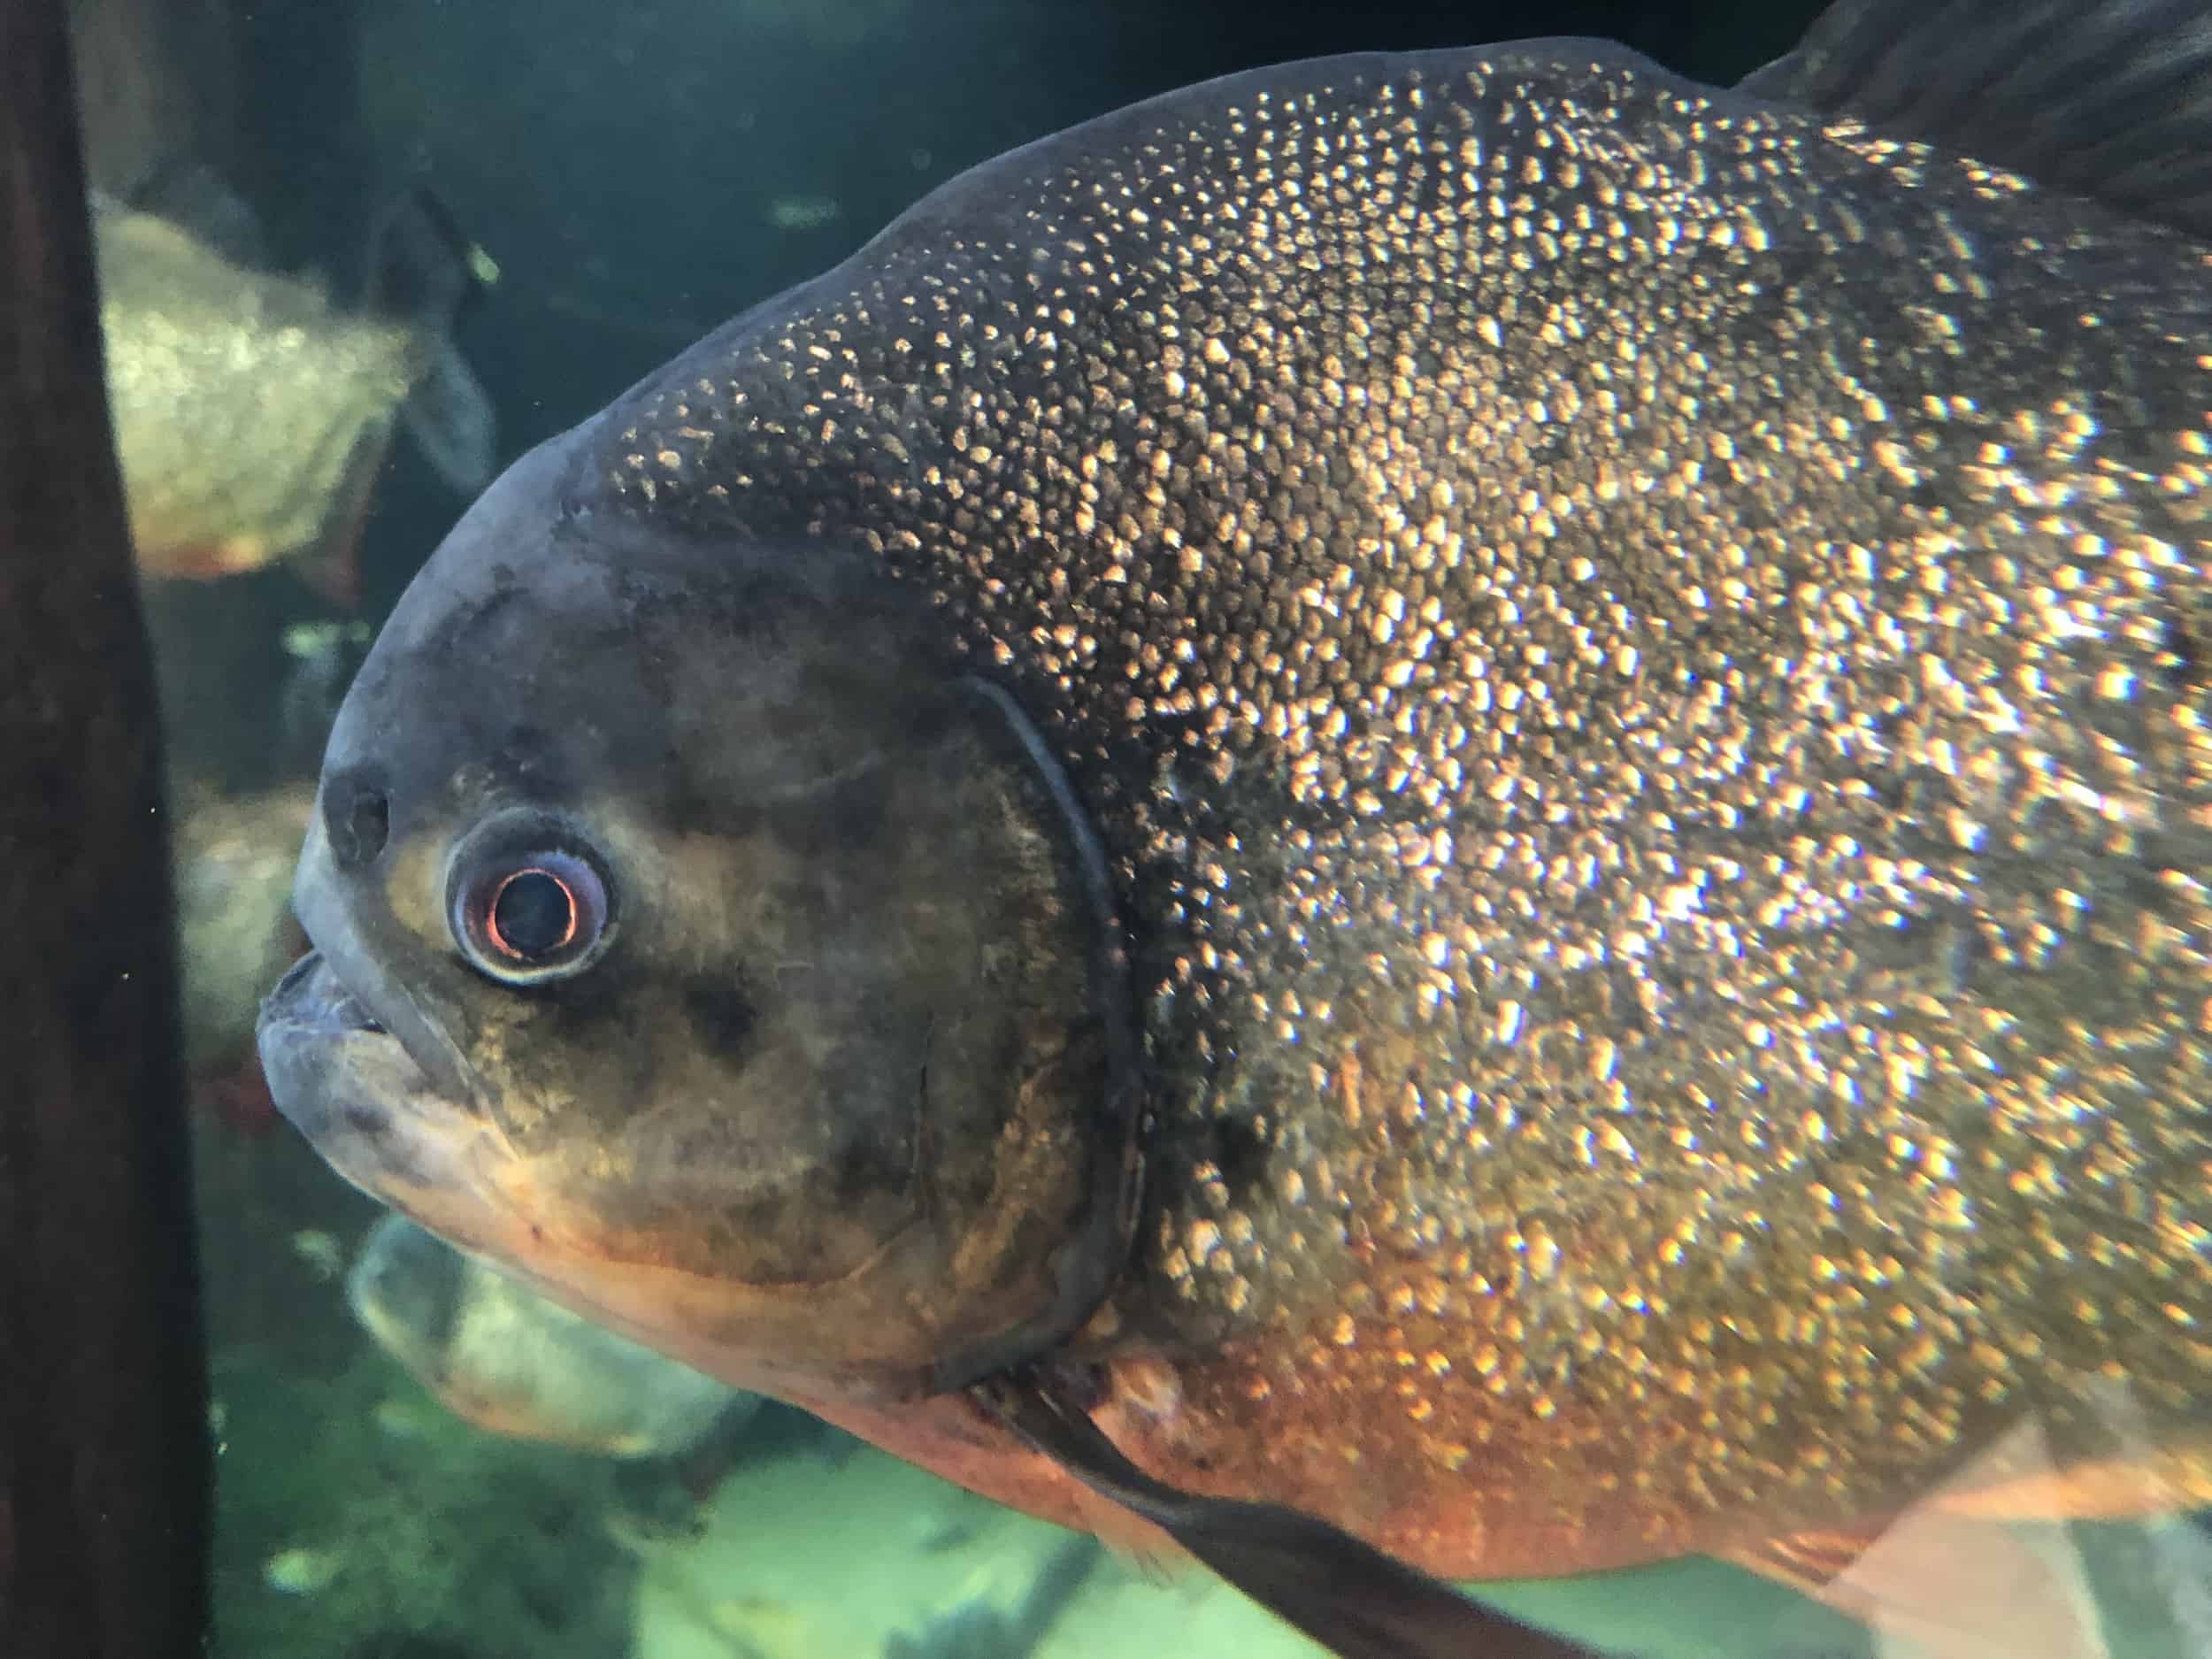 Piranha in Amazon Rising on the Main Level at the Shedd Aquarium in Chicago, Illinois